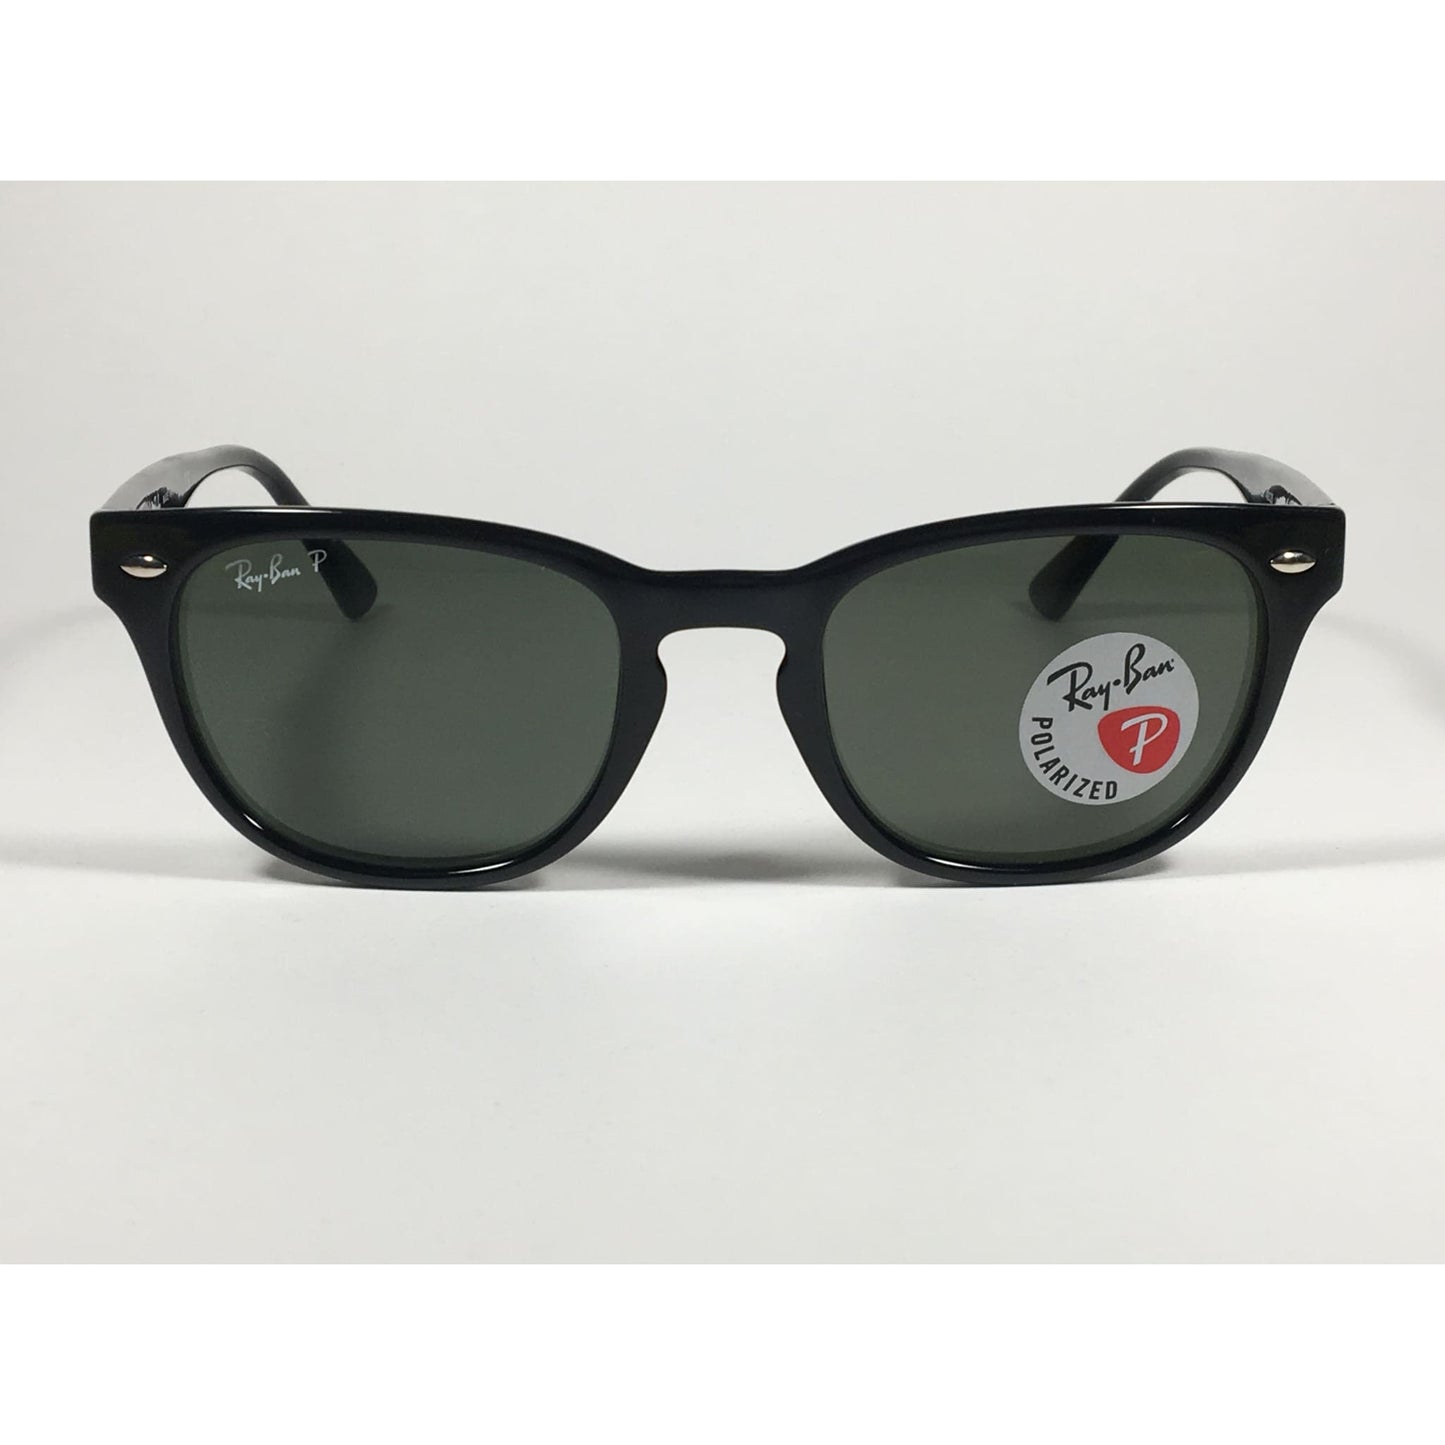 Ray-Ban Polarized Keyhole Wayfarer Sunglasses Black Gloss Frame Green Lens RB4140 601/58 - Sunglasses